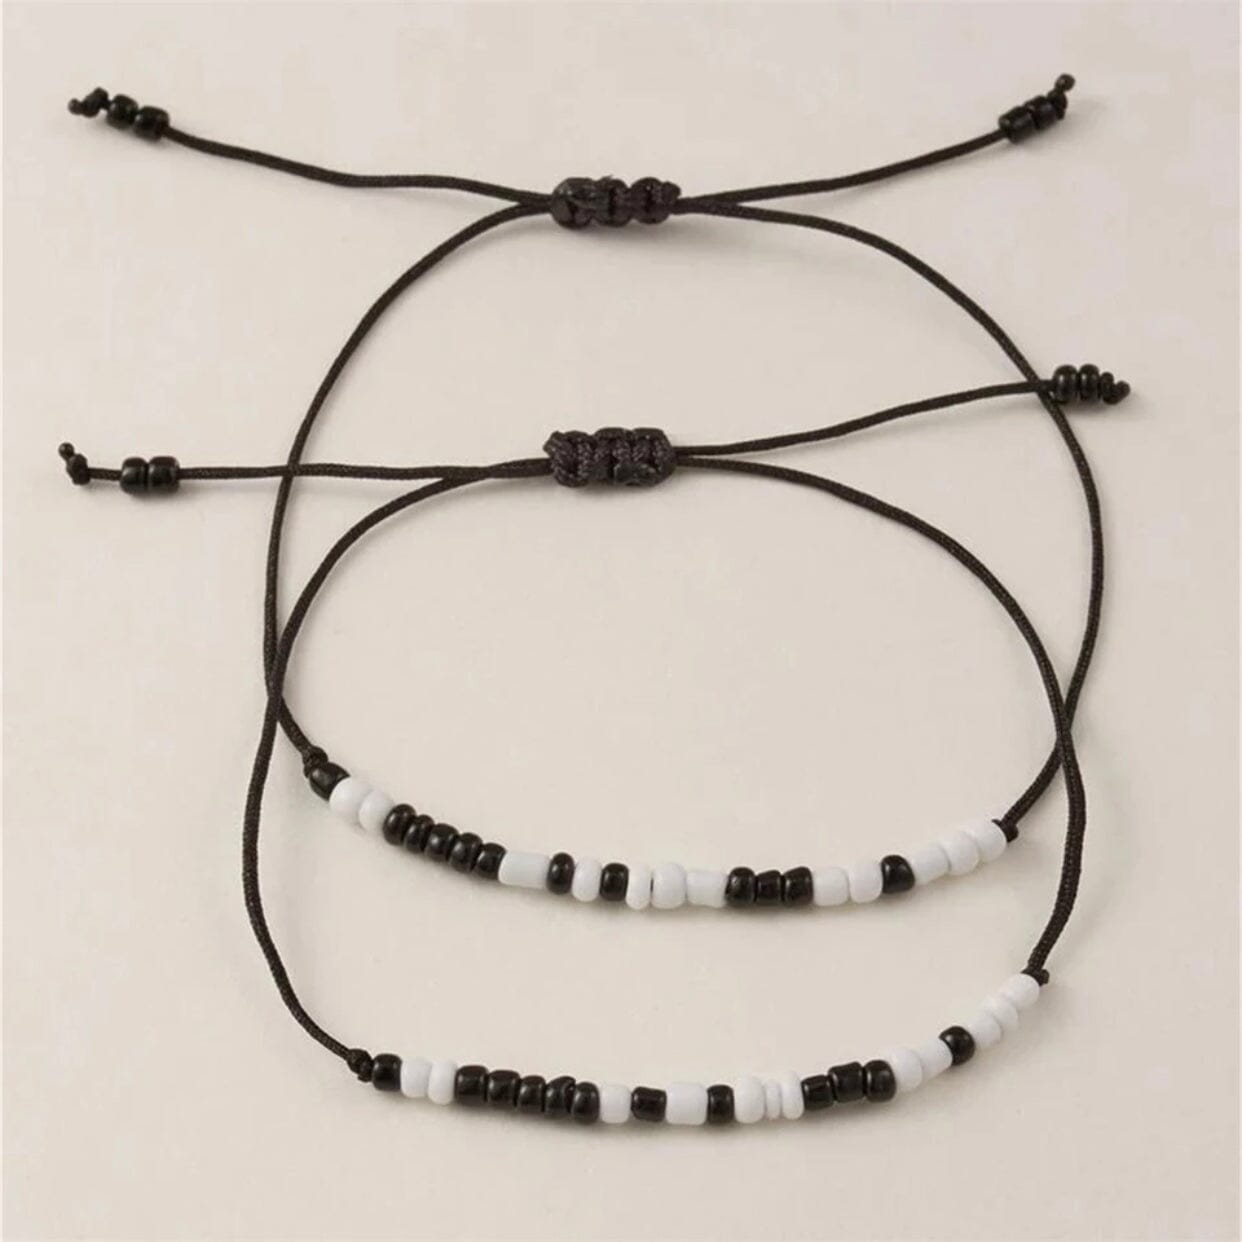 I Love You - Morse Code Bracelet Set - Luke Adams Glass Blowing Studio